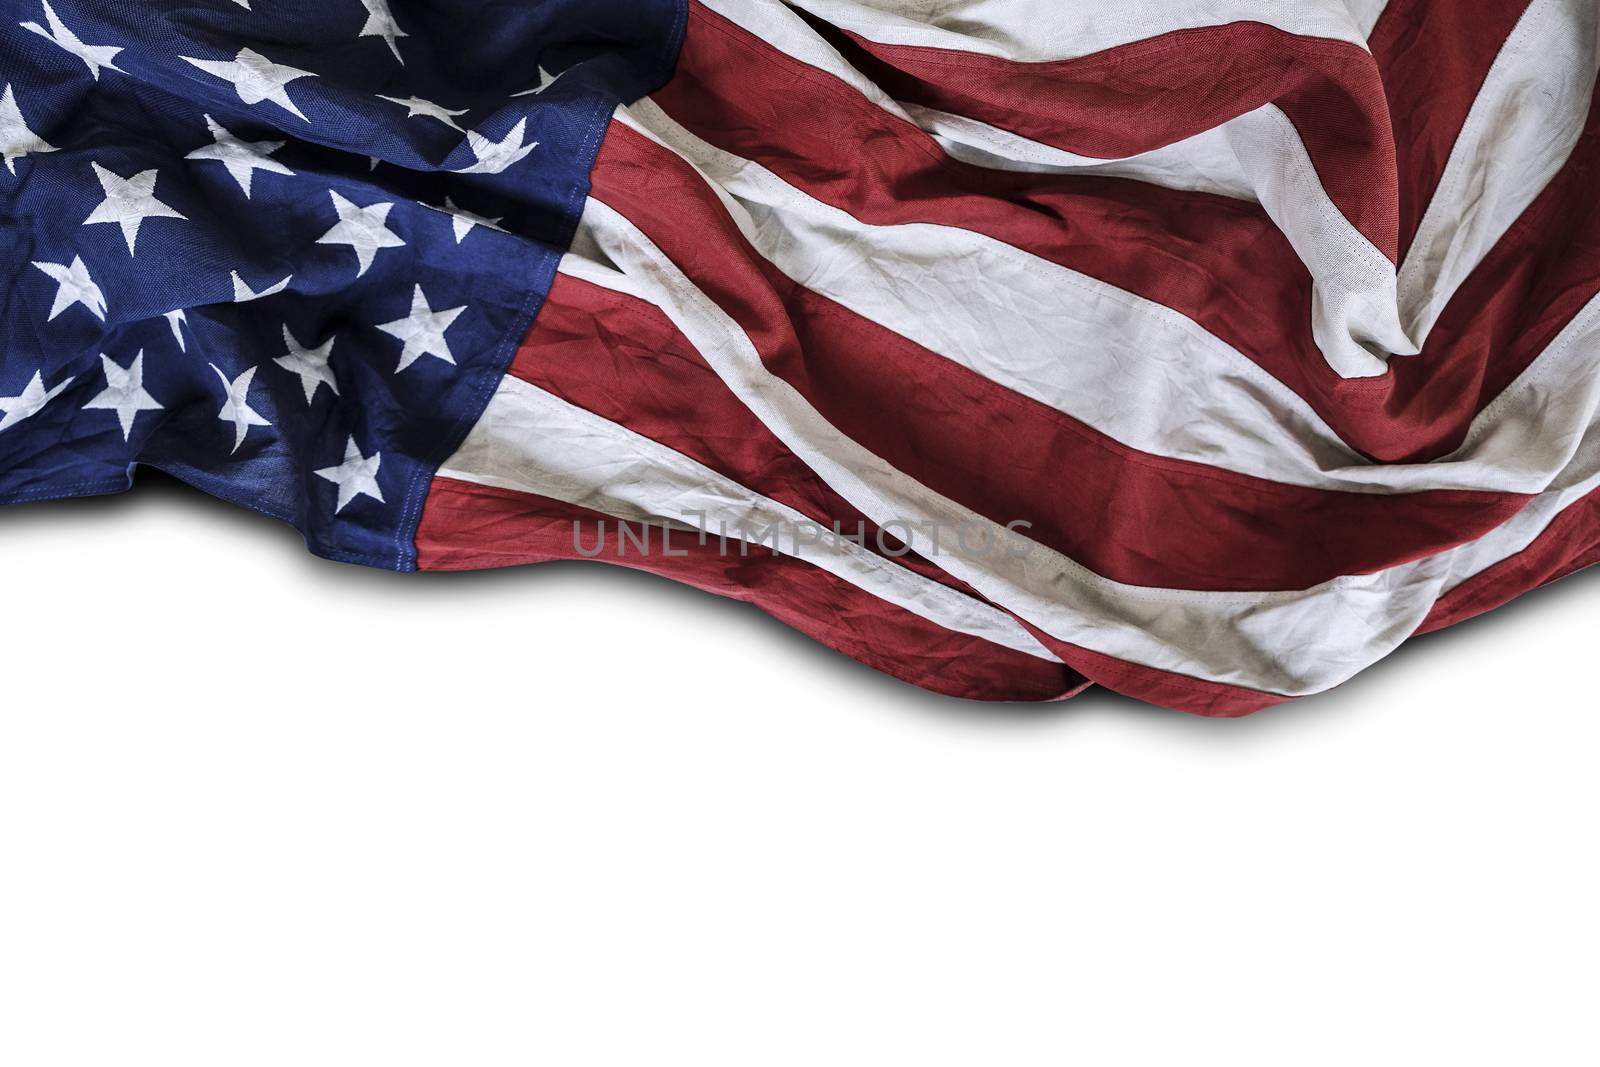 United States of America flag isolated on white background USA b by Myimagine